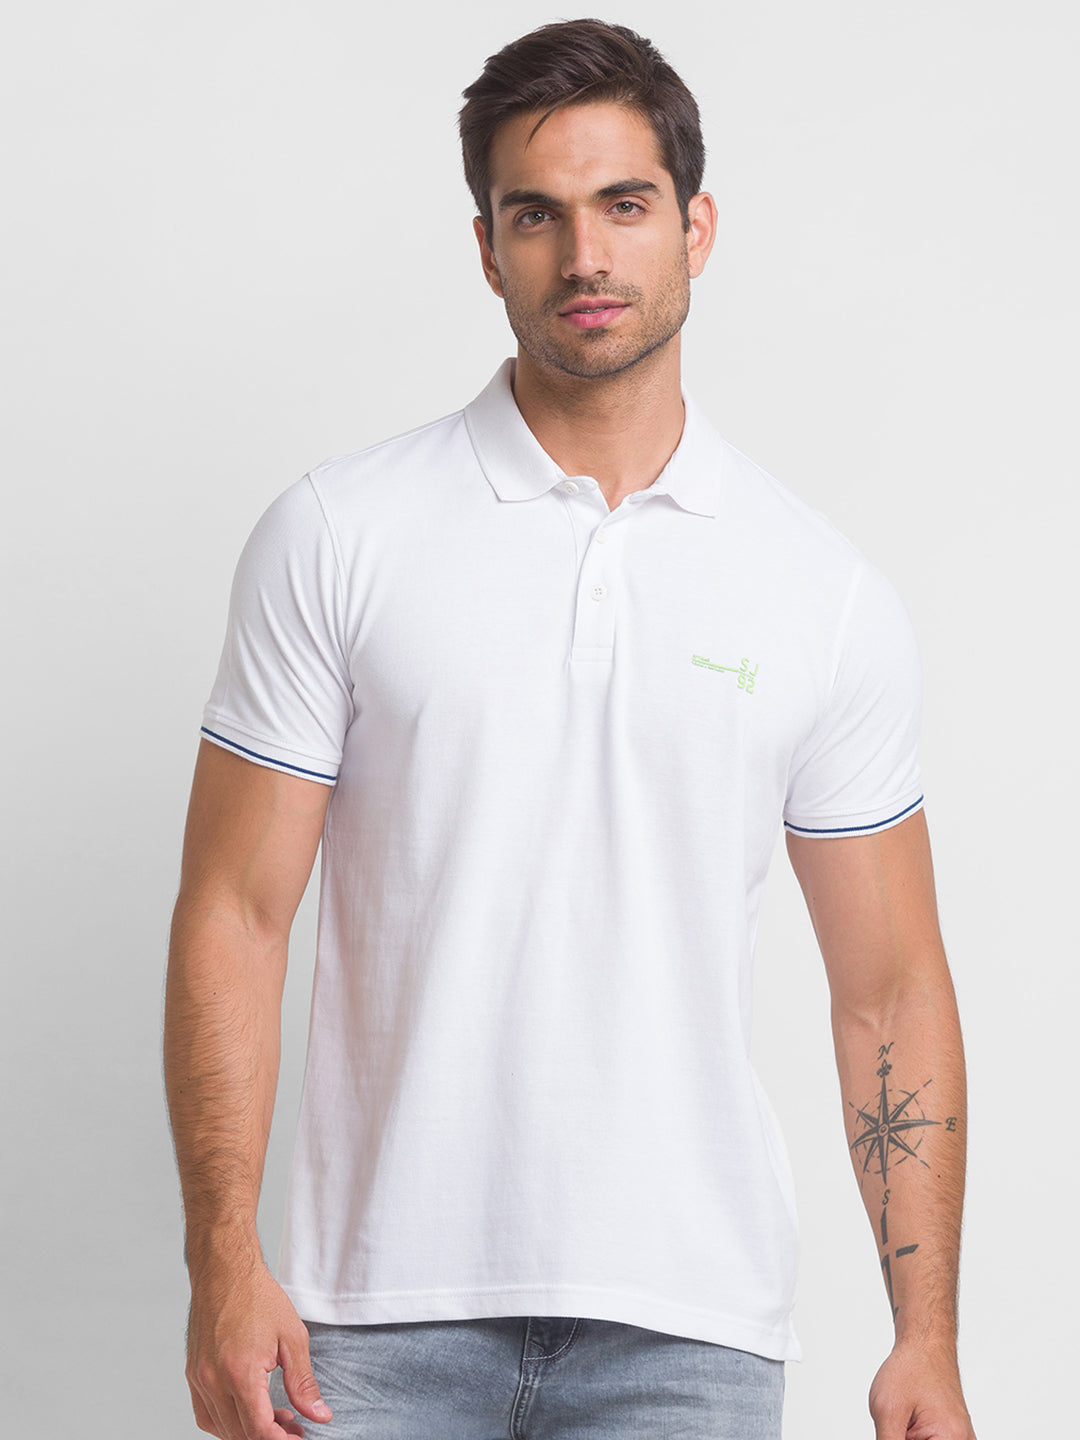 Spykar White Cotton Half Sleeve Plain Casual Polo T-Shirt For Men